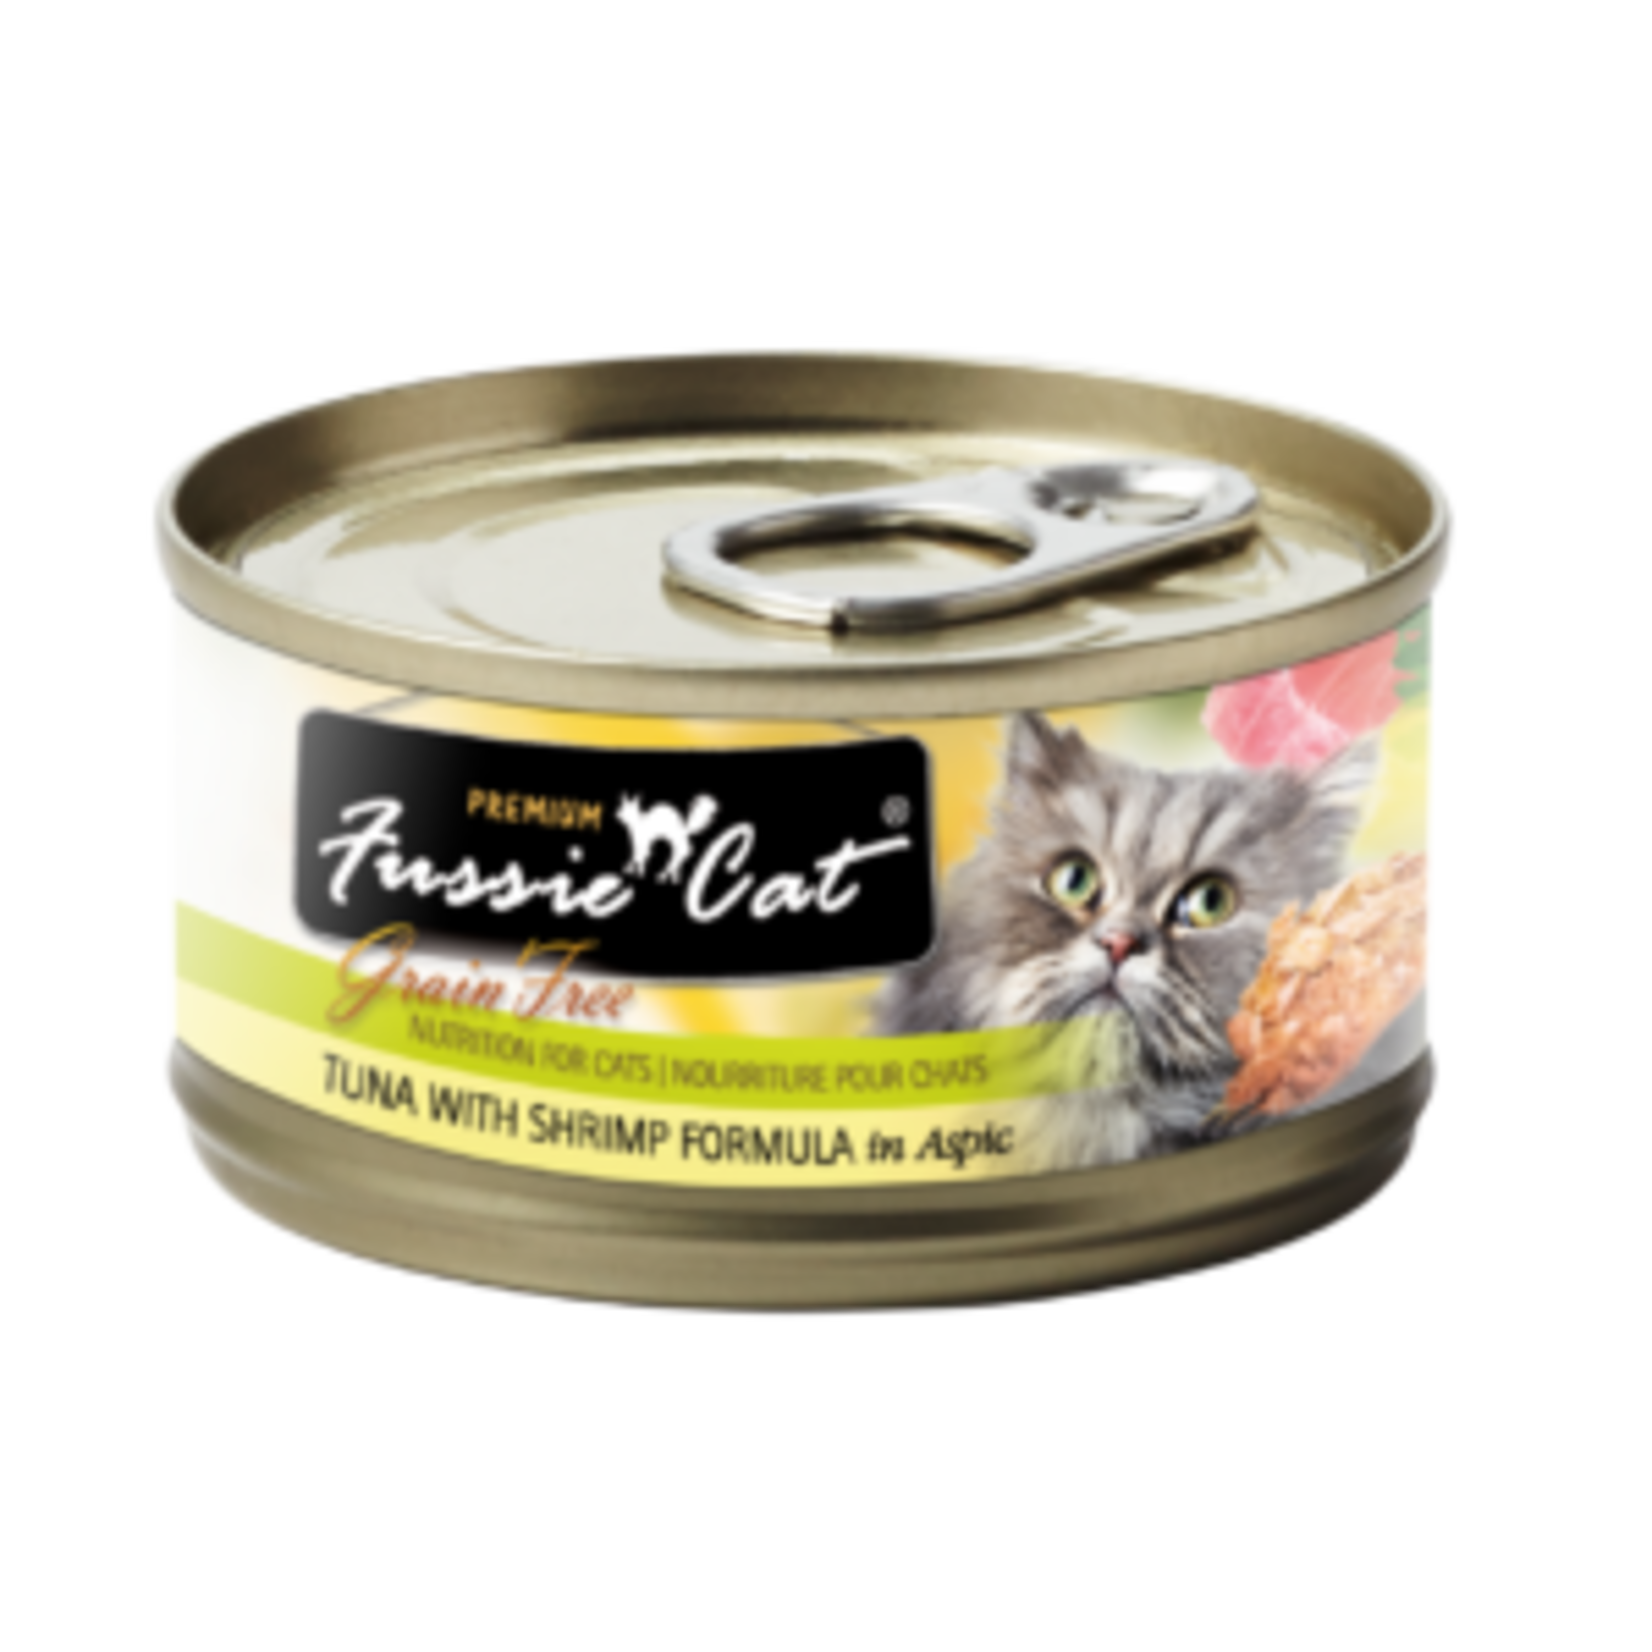 Fussie Cat Fussie Cat Wet Cat Food Tuna with Shrimp Formula in Aspic 2.8oz Can Grain Free